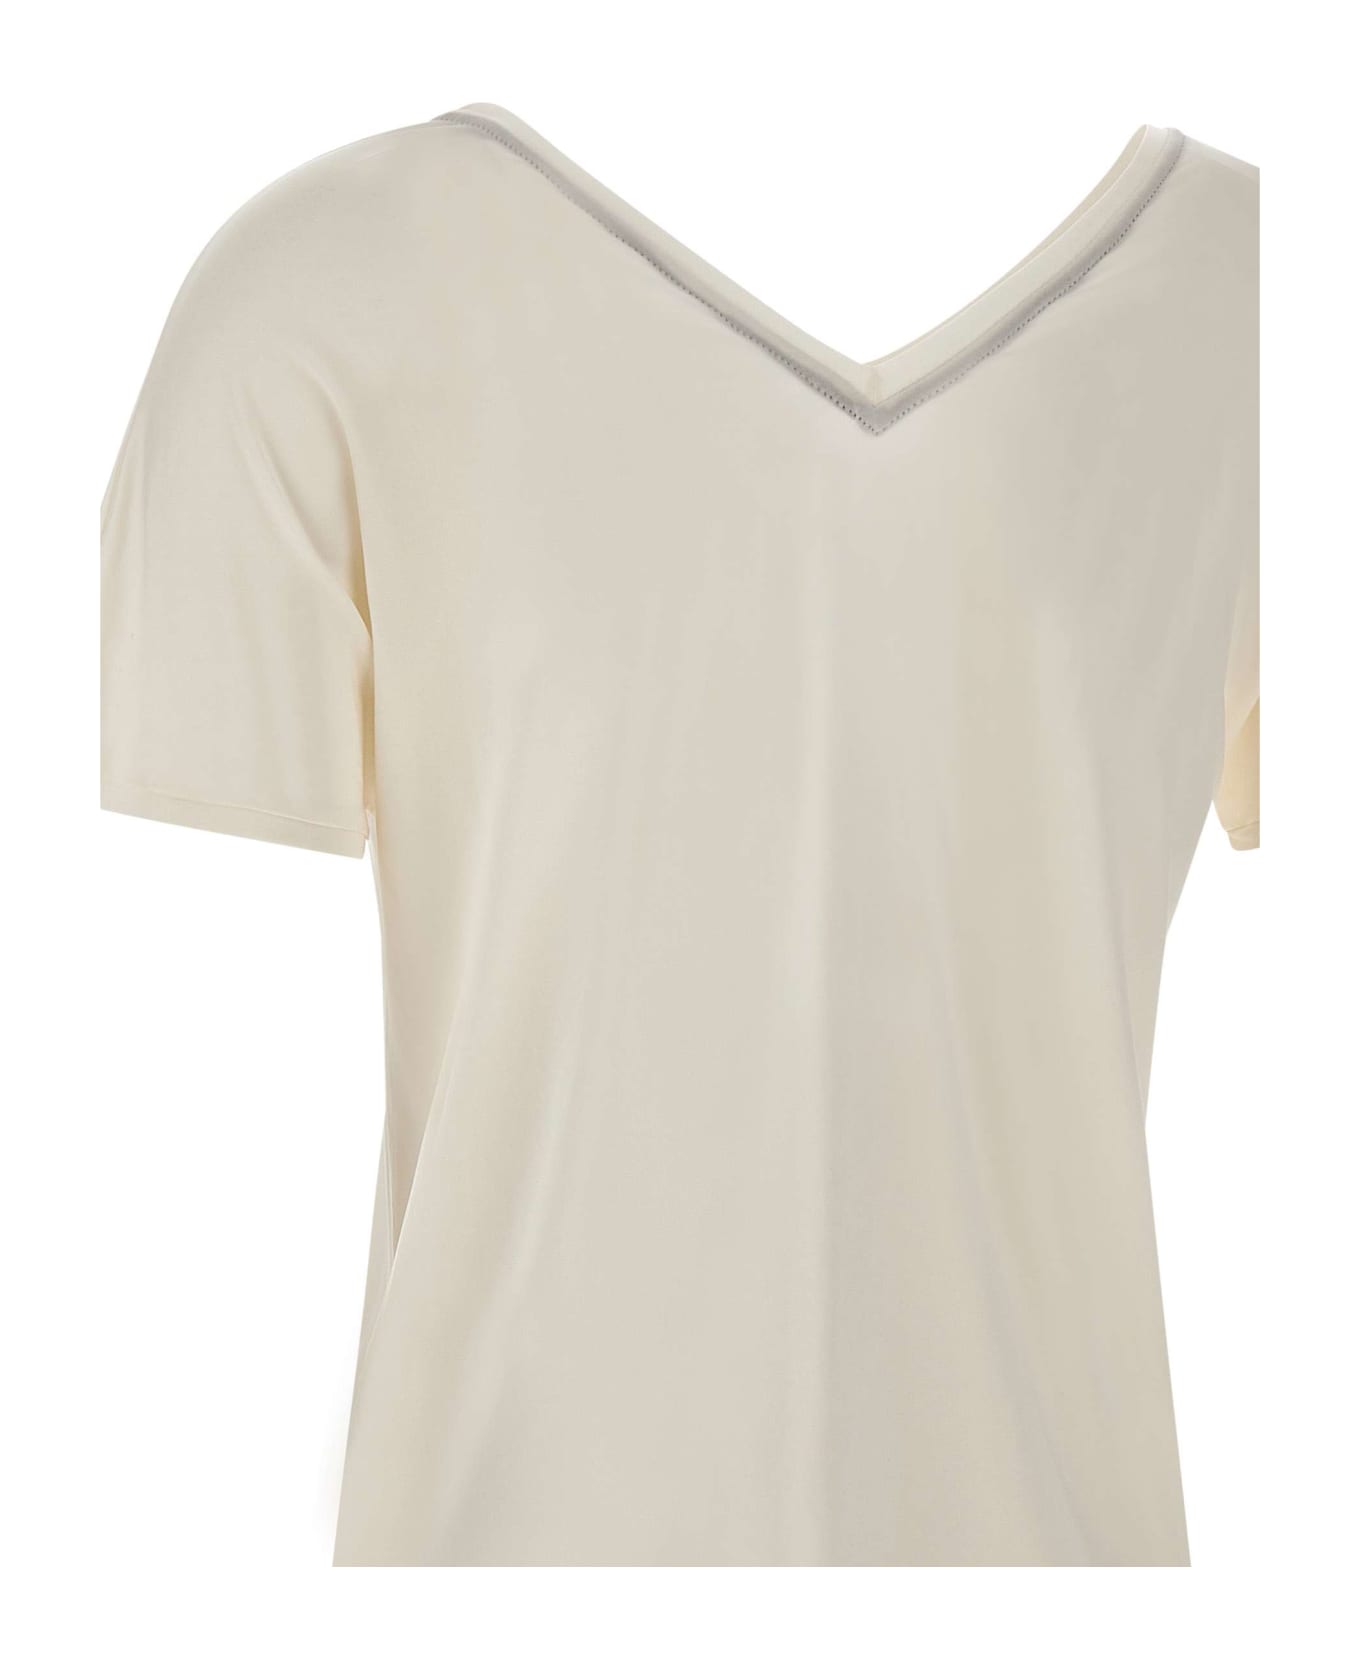 RRD - Roberto Ricci Design Cupro Fabric T-shirt - WHITE